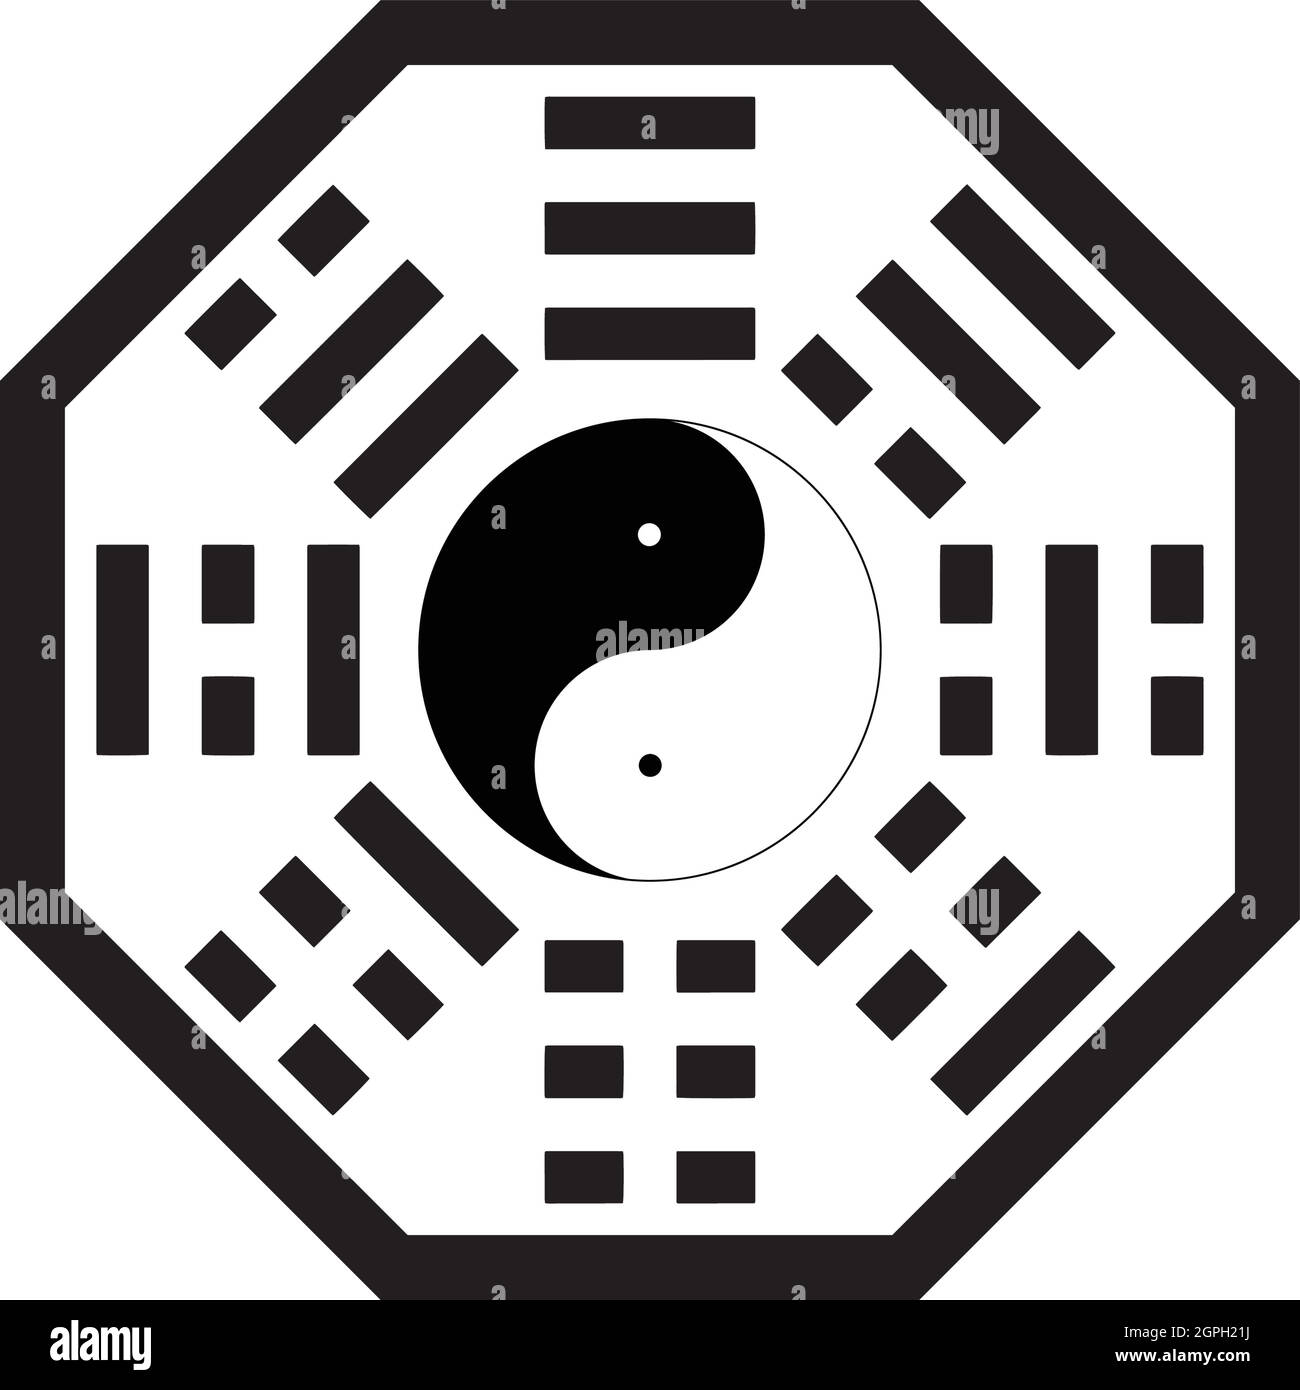 3d rendering of yin and yang symbol with bagua arrangement Stock Vector